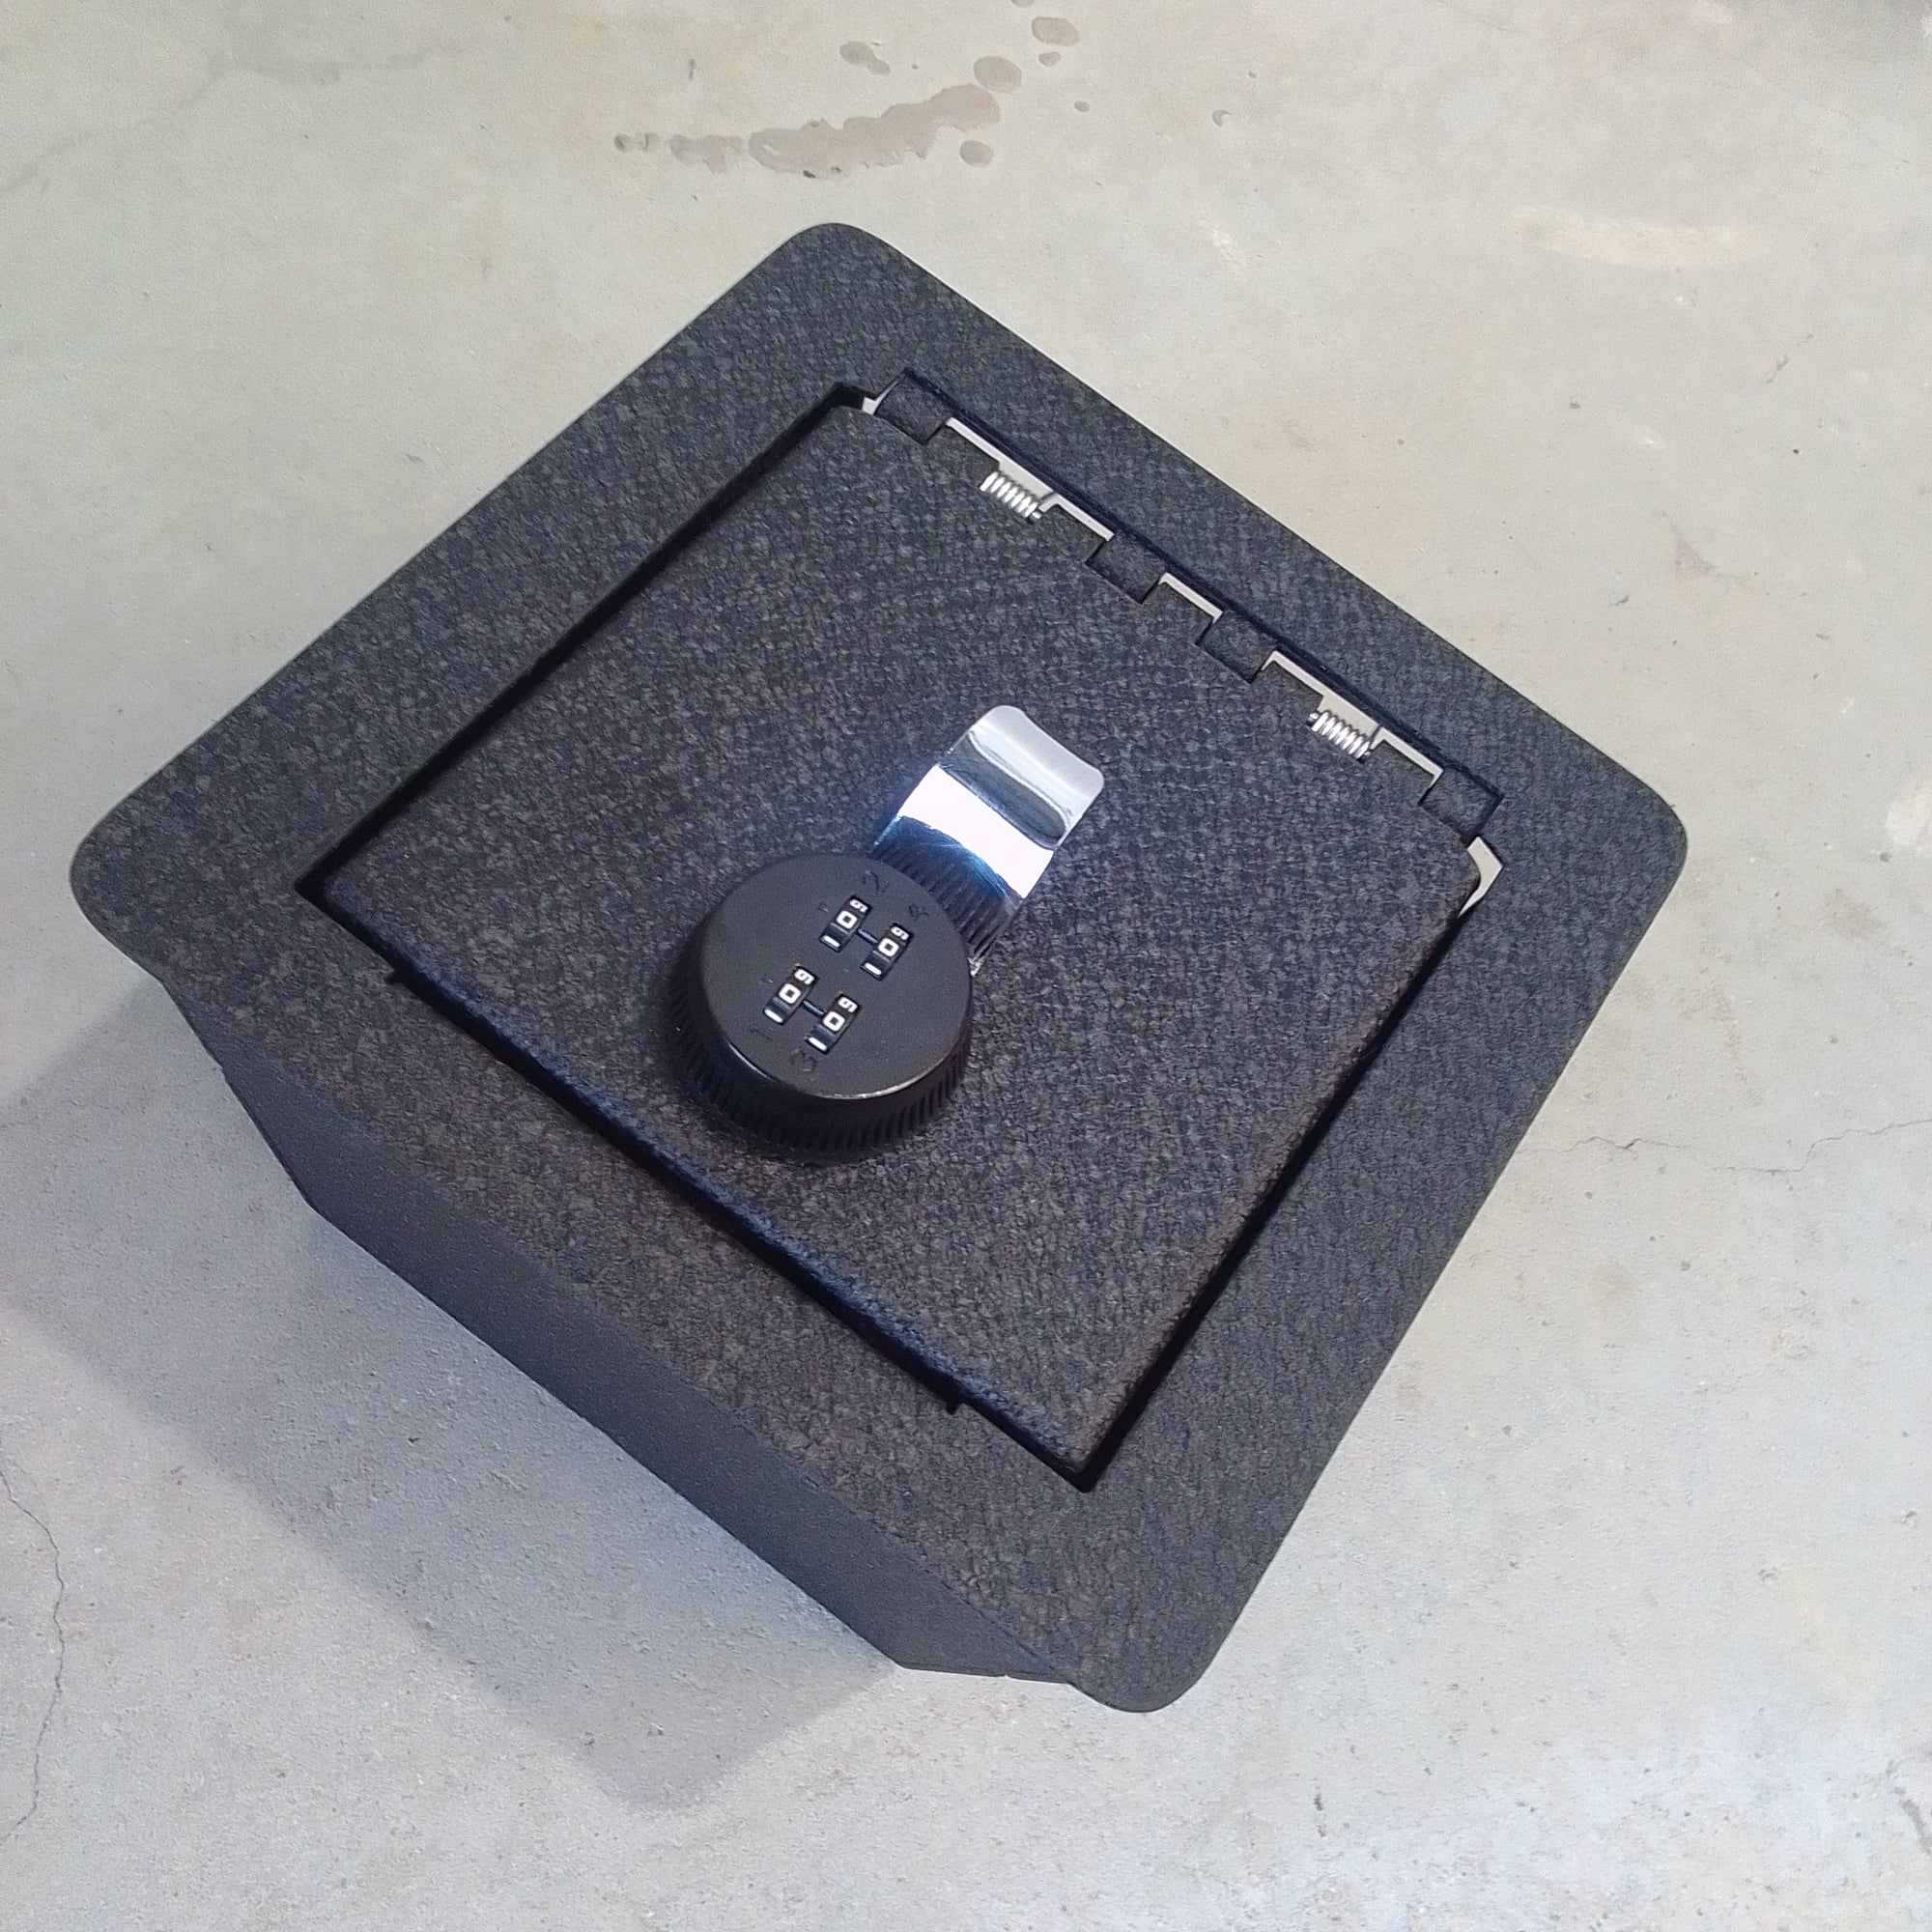 FJ Cruiser Metal safe(black) with 4 digit combination lock.